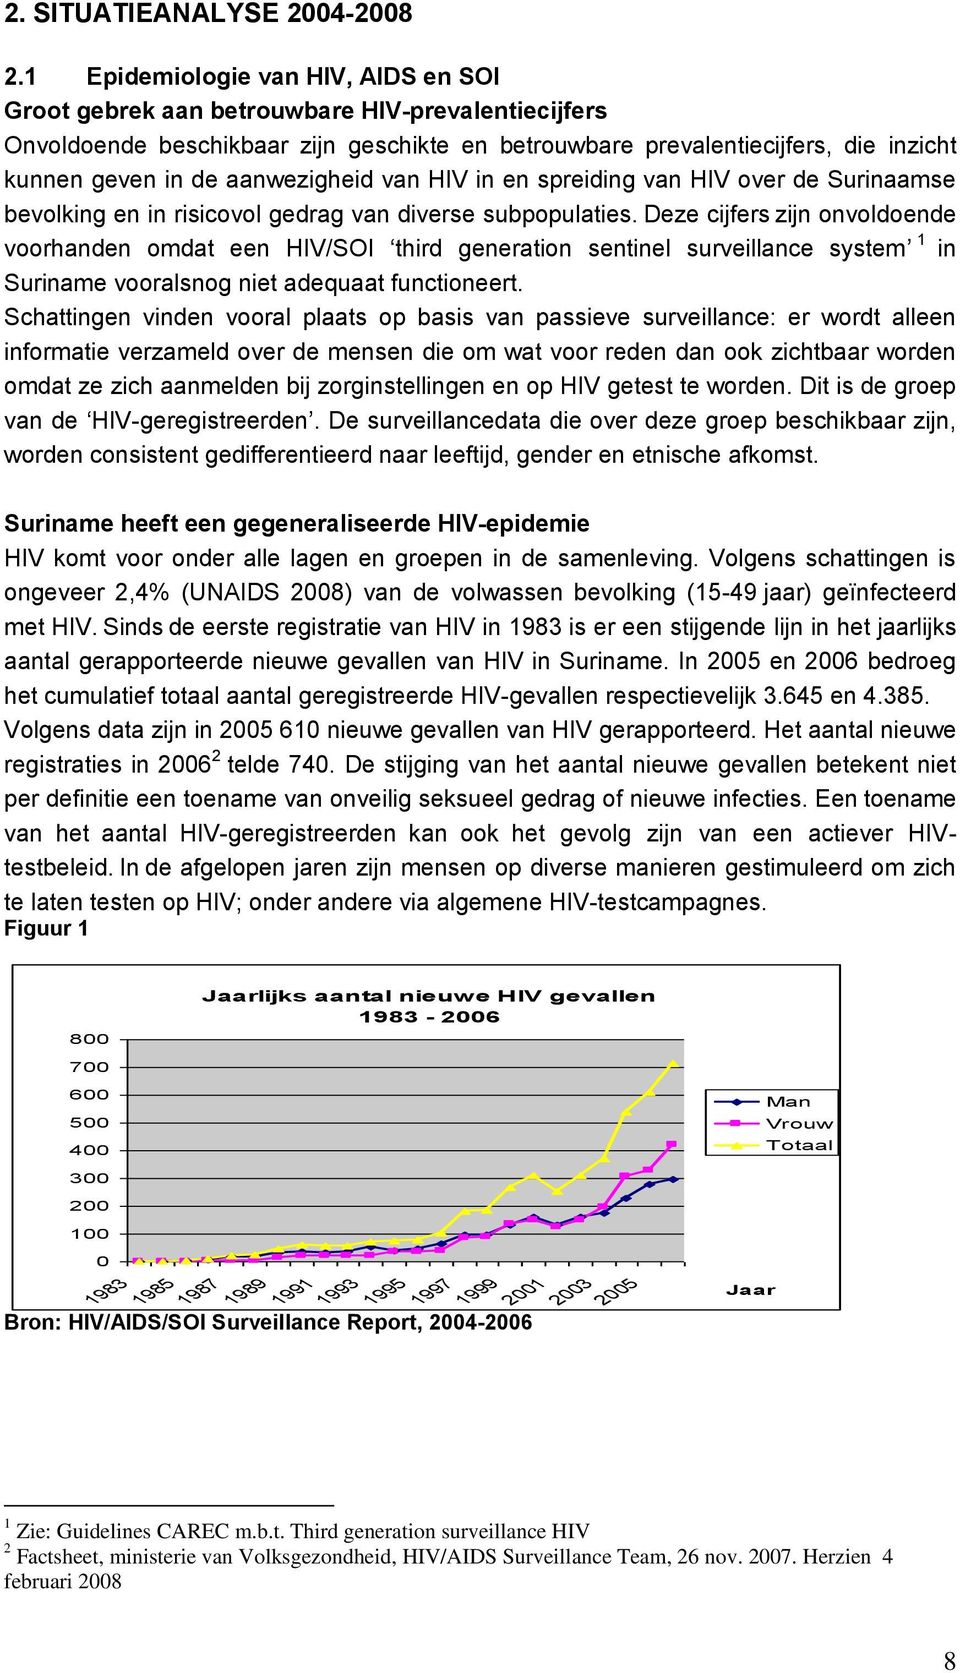 aanwezigheid van HIV in en spreiding van HIV over de Surinaamse bevolking en in risicovol gedrag van diverse subpopulaties.